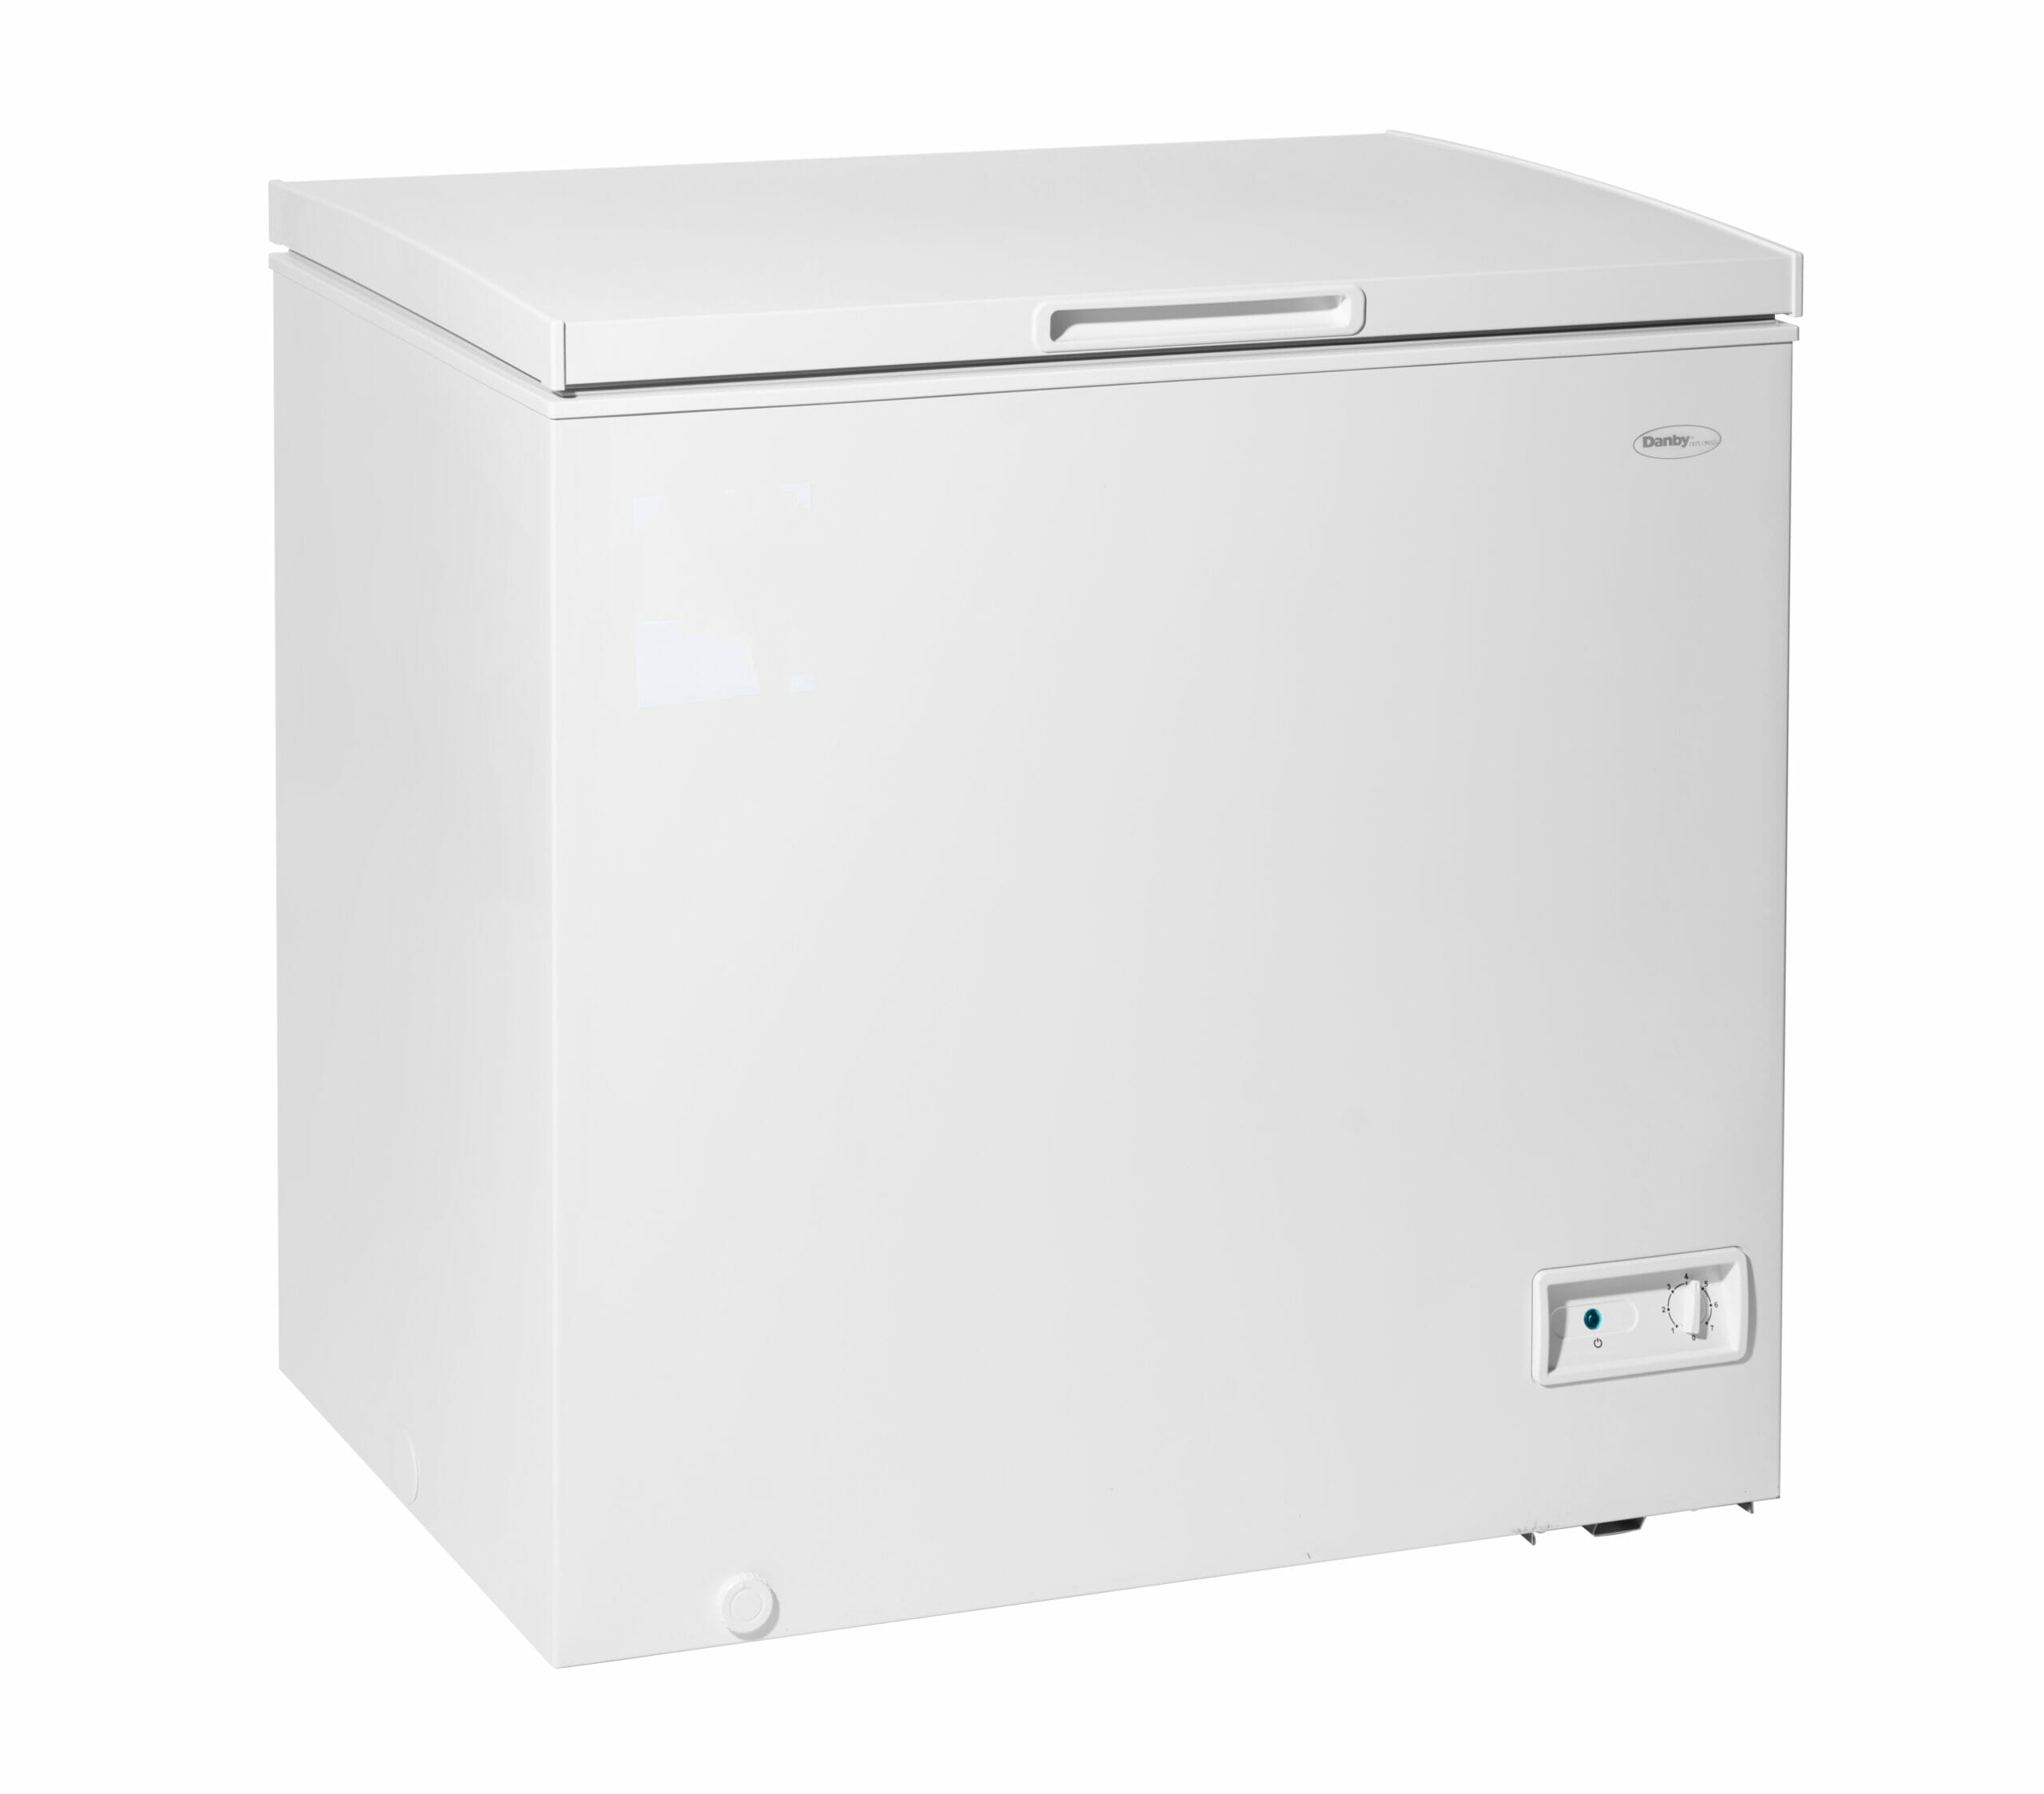 Danby - 7 cu. Ft  Chest Freezer in White - DCF070A6WM